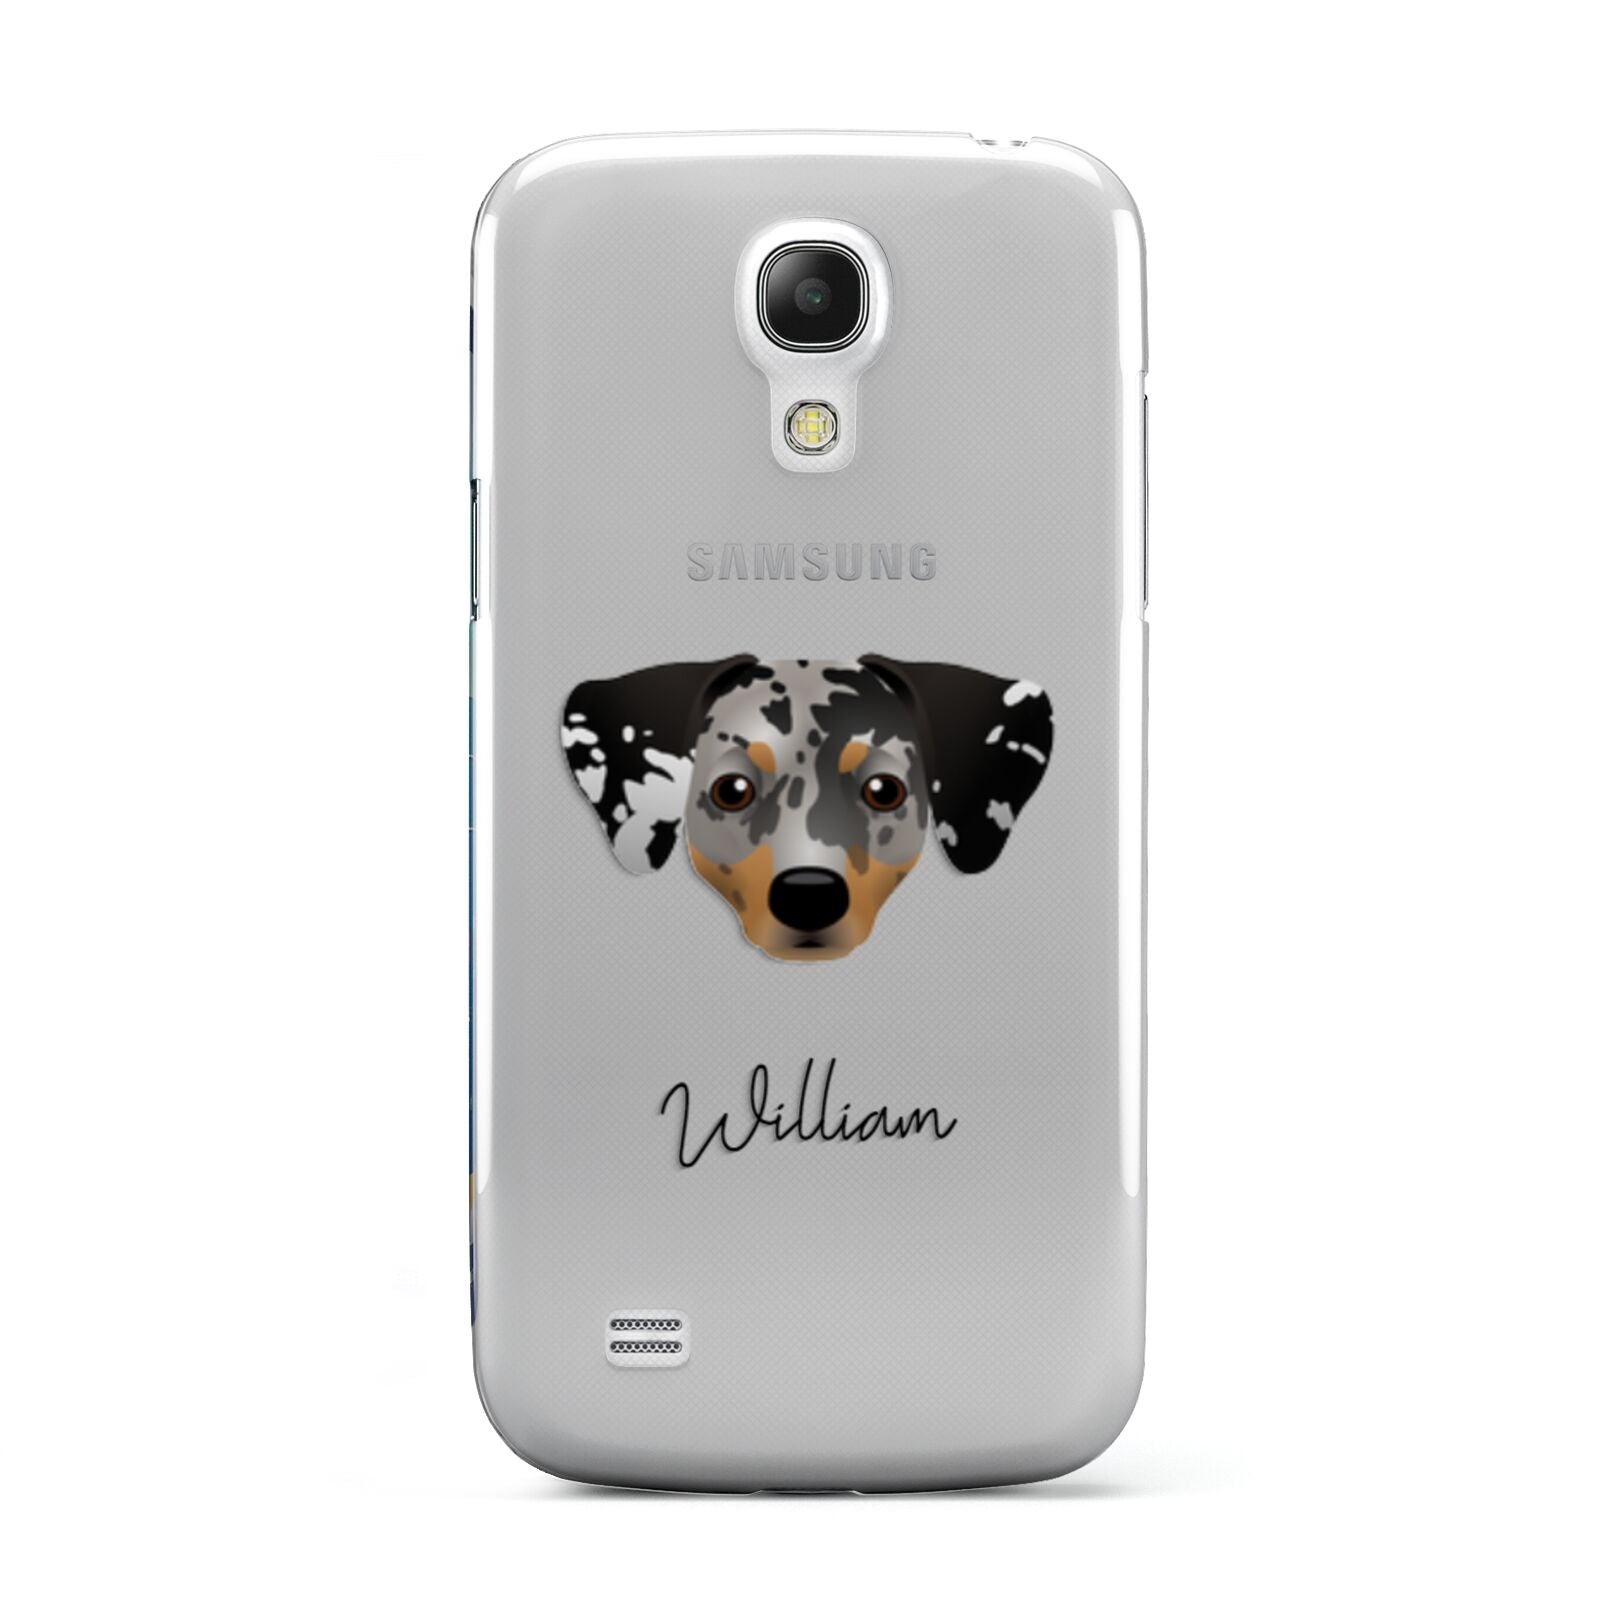 Chiweenie Personalised Samsung Galaxy S4 Mini Case